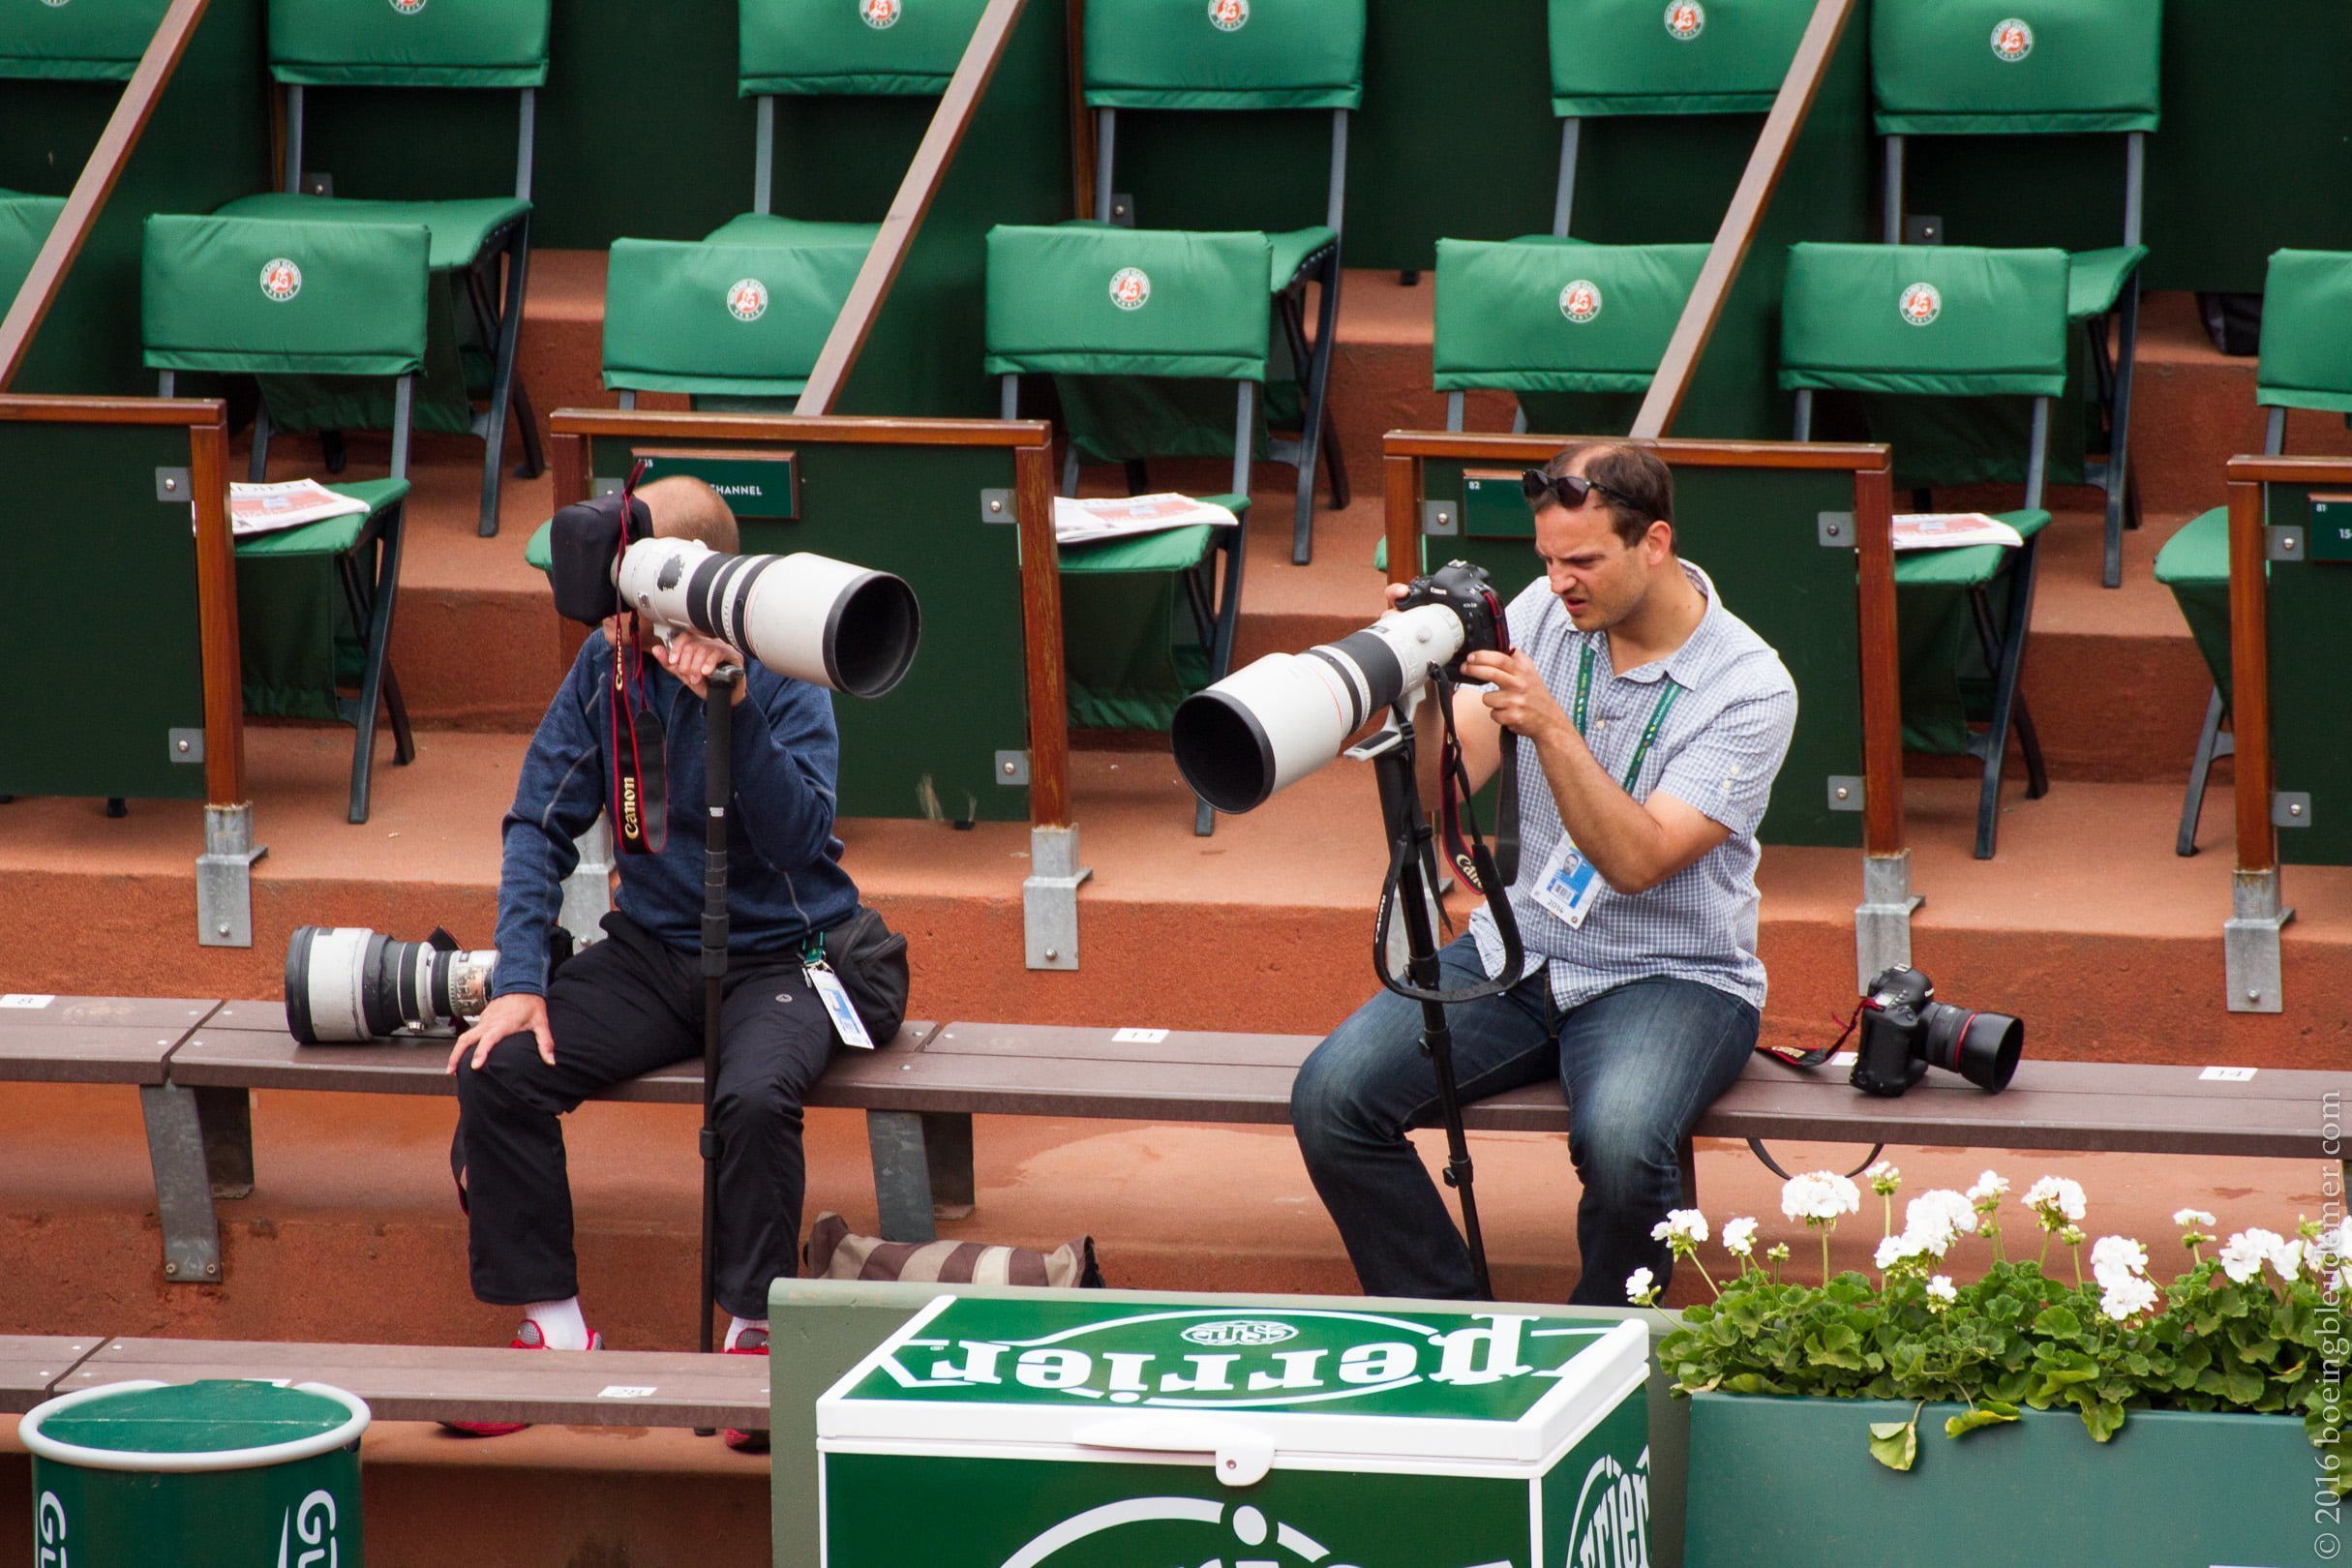 Roland Garros: photographes profesionnels